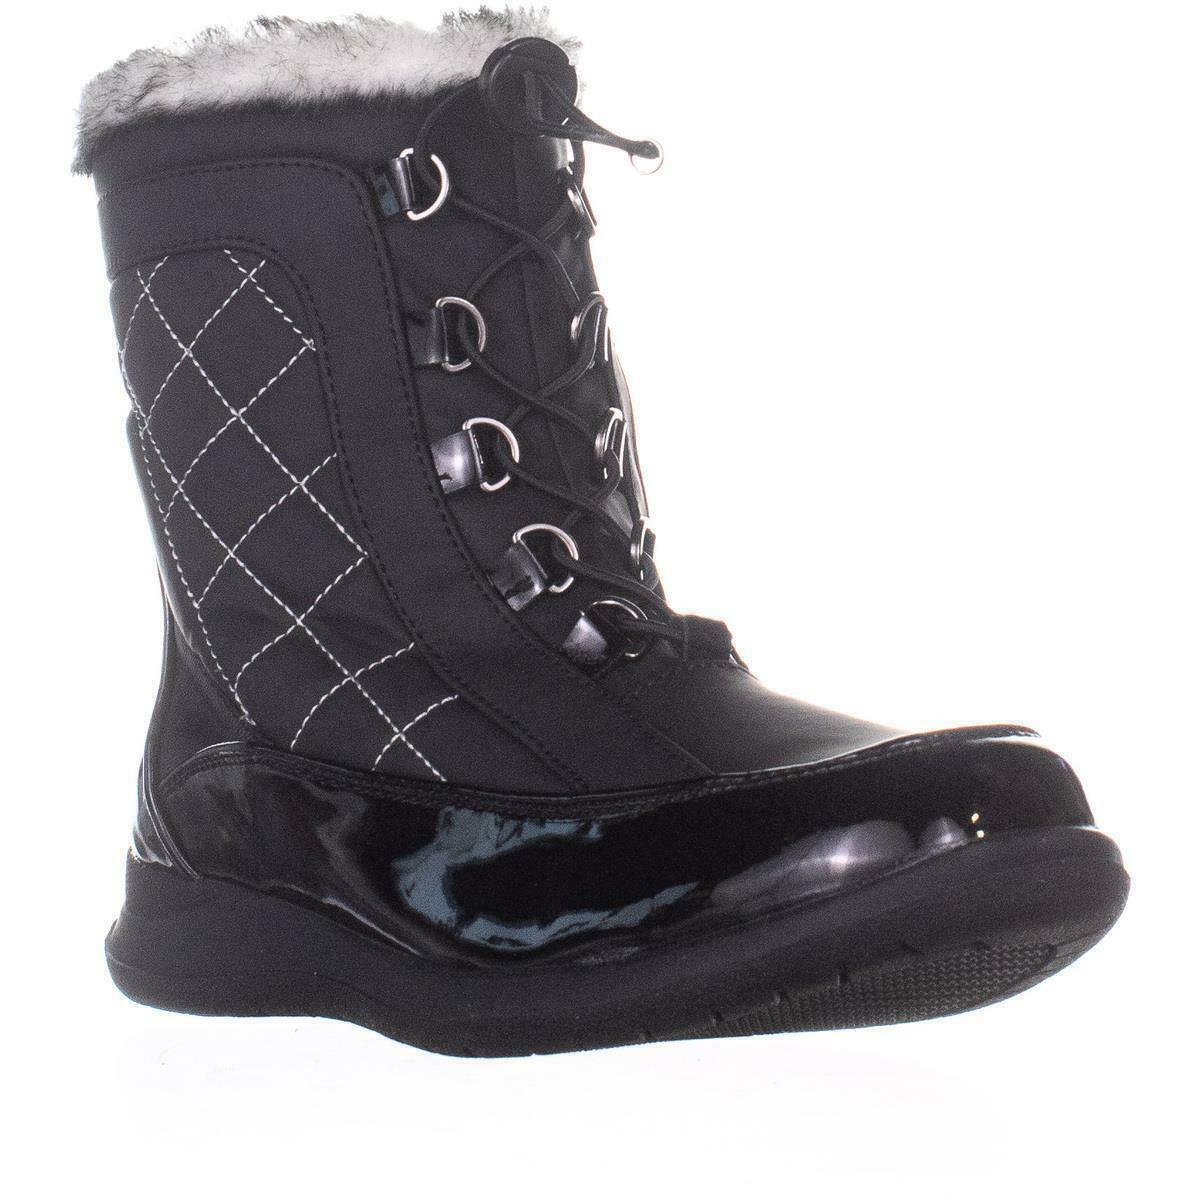 Sporto Jenny Mid Calf Winter Boots, Black, 8 US - Boots